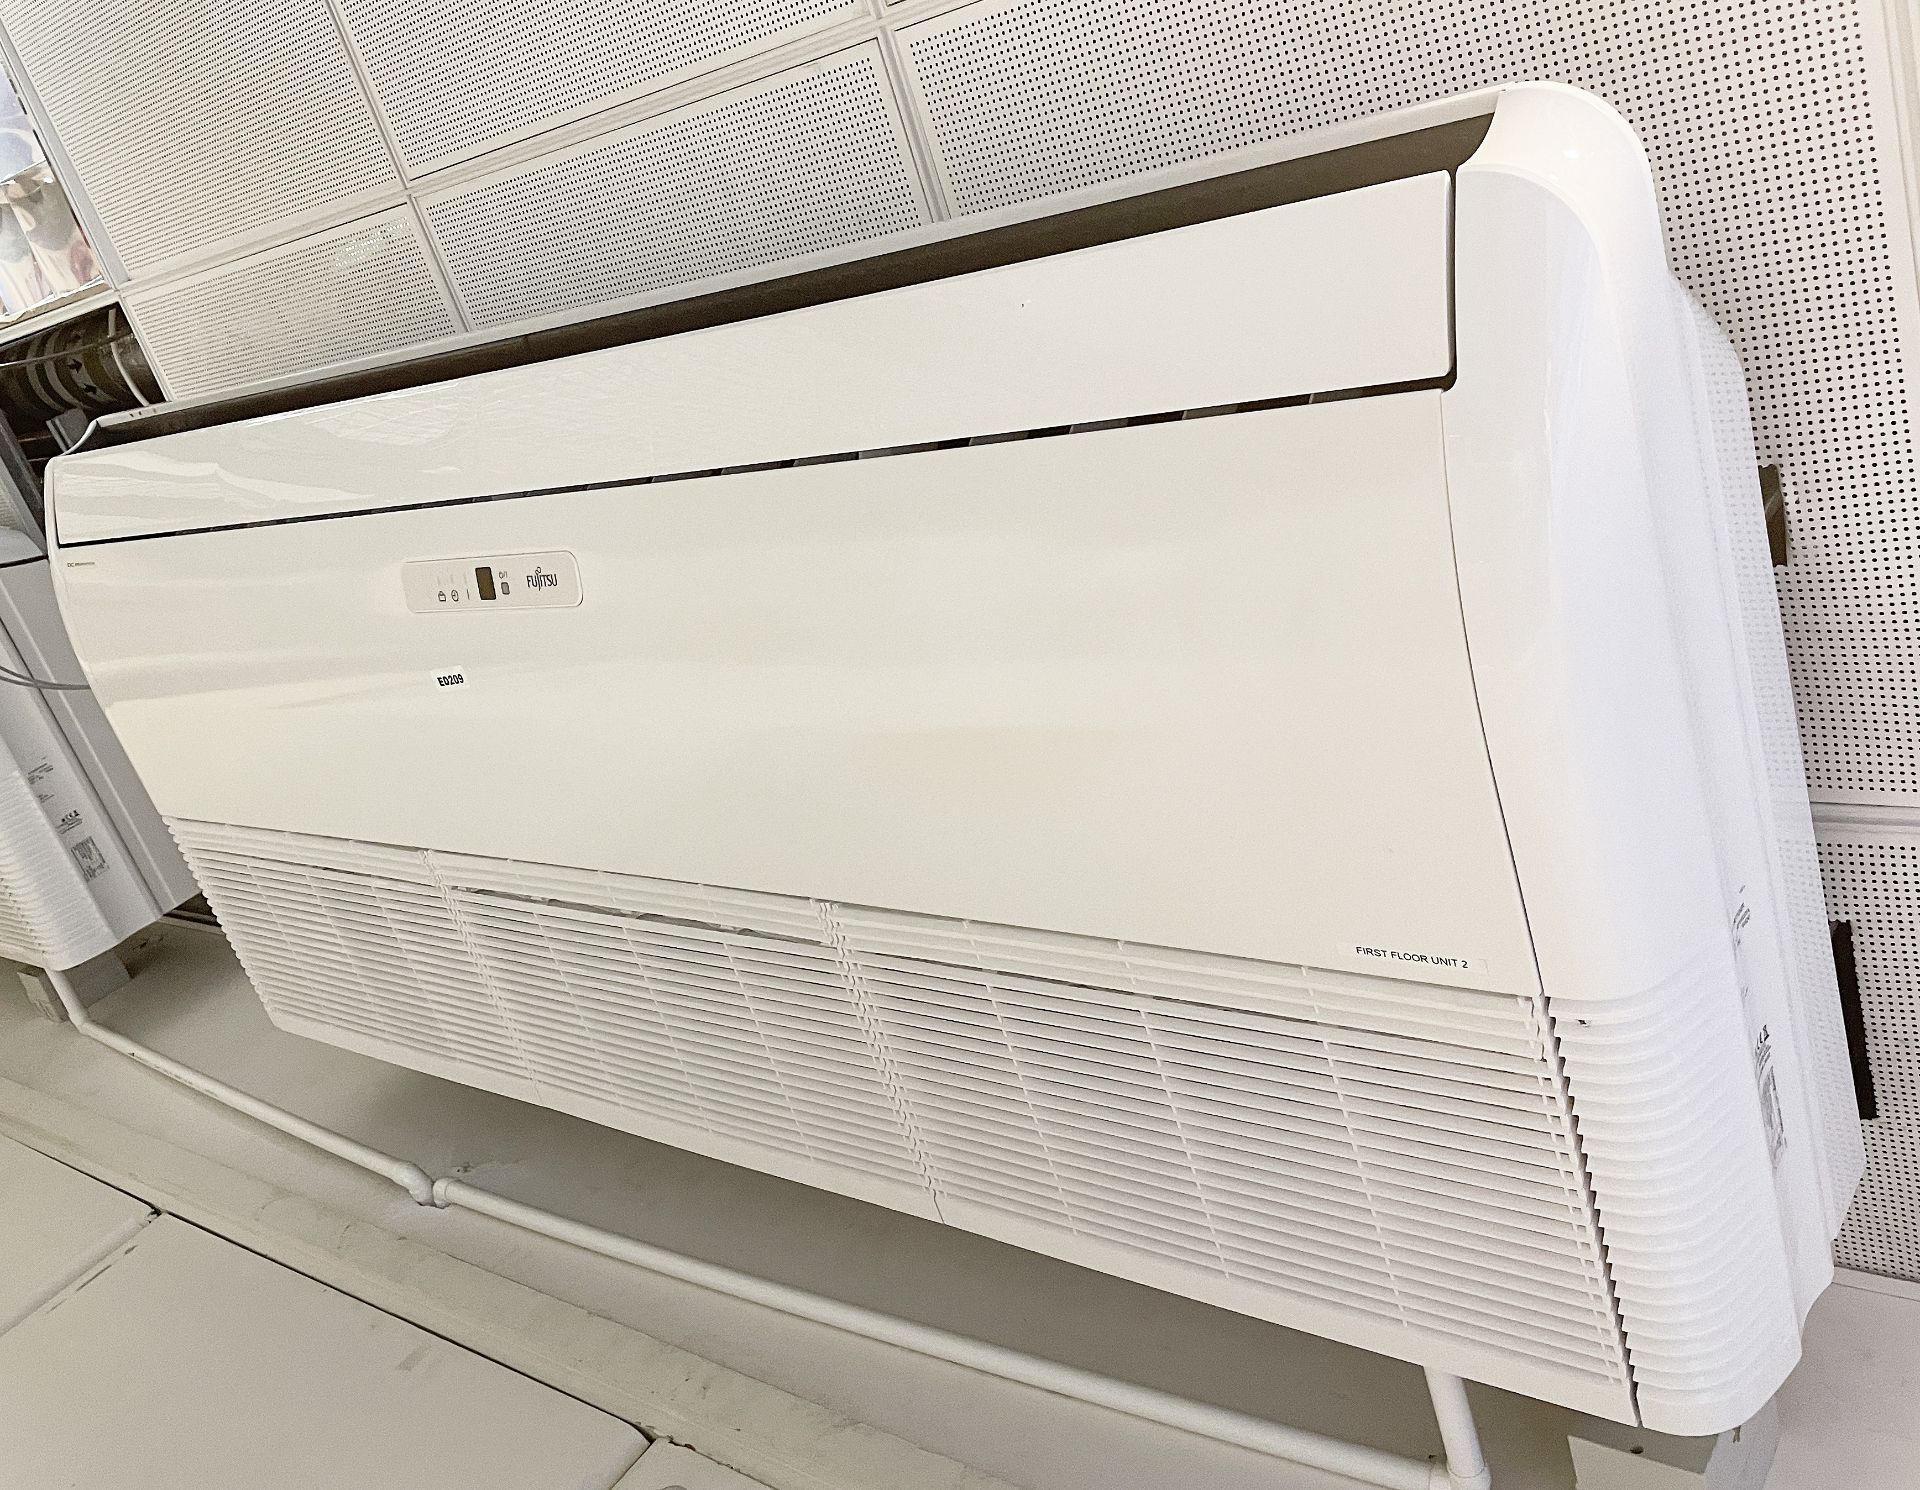 1 x Fujitsu Air Conditioning Slimline Floor Ceiling Mounted Heat Pump Inverter - Image 2 of 5